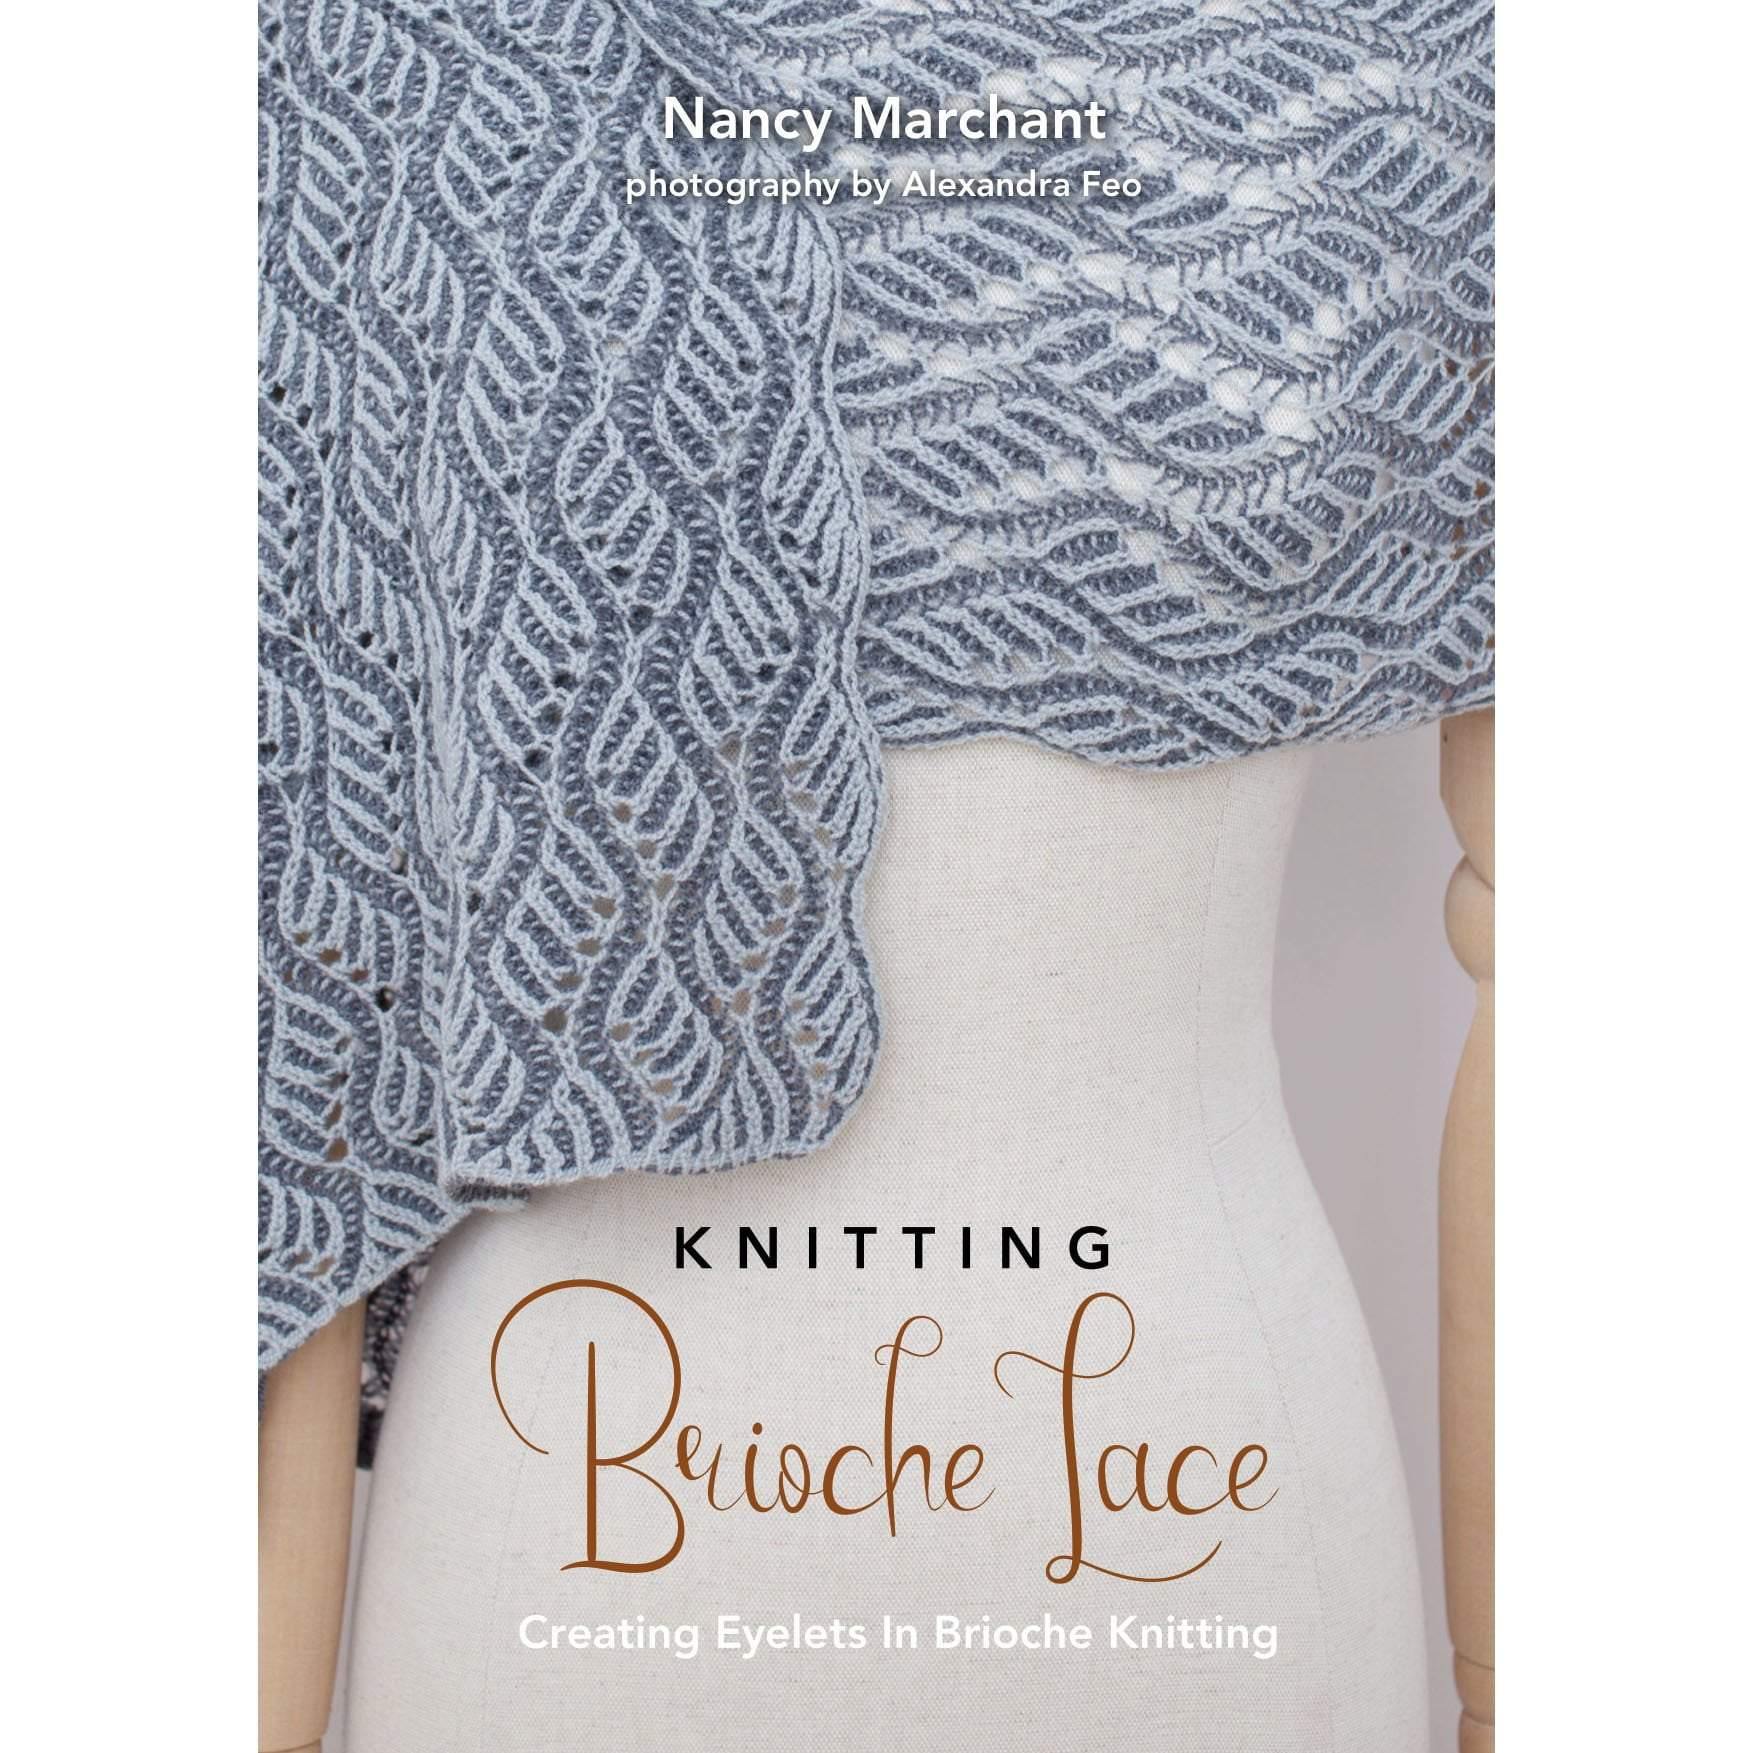 Knitting Brioche Lace by Nancy Marchant Nancy Marchant